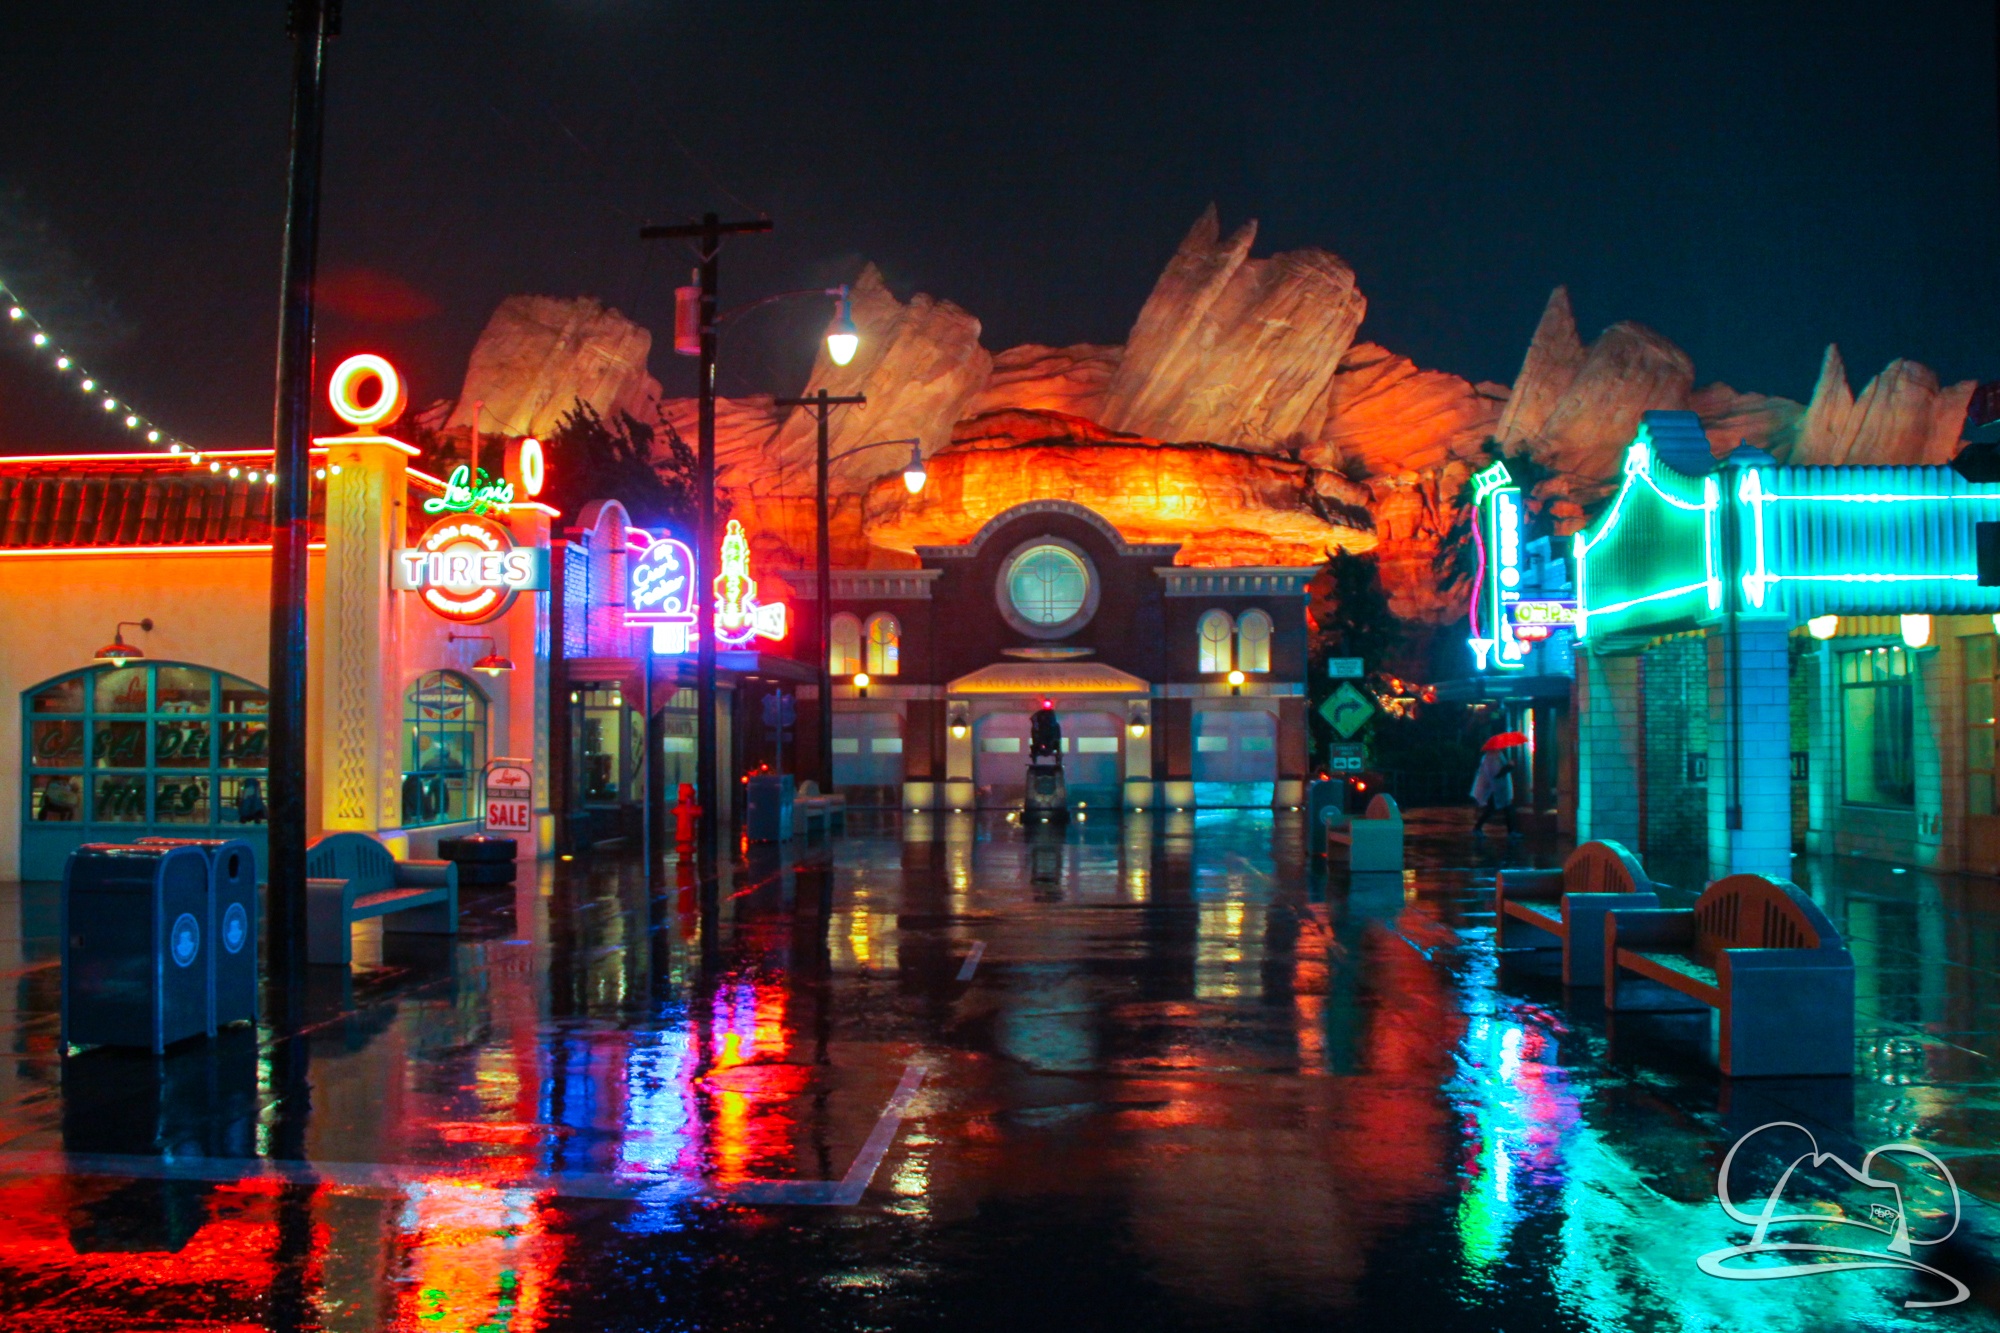 A Very Rainy Day at the Disneyland Resort